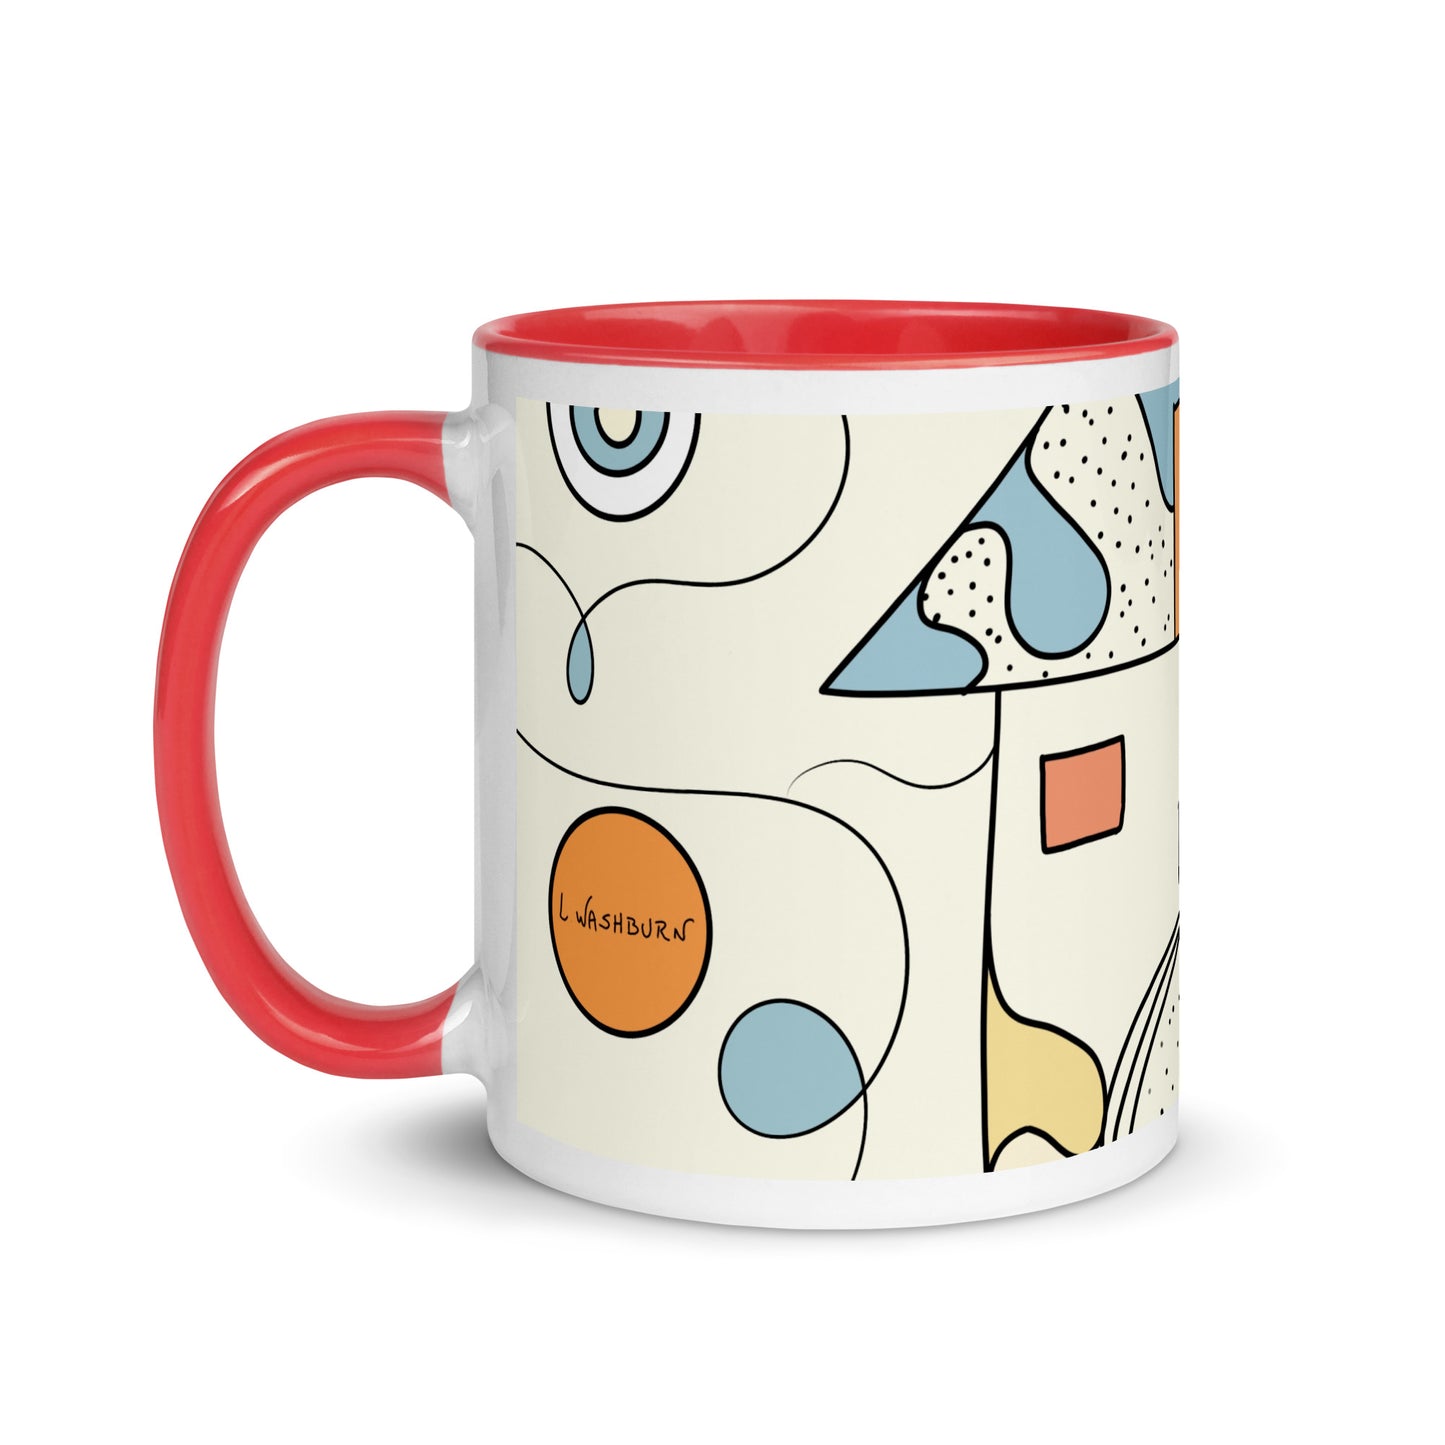 Mug with Color Inside home sweet home